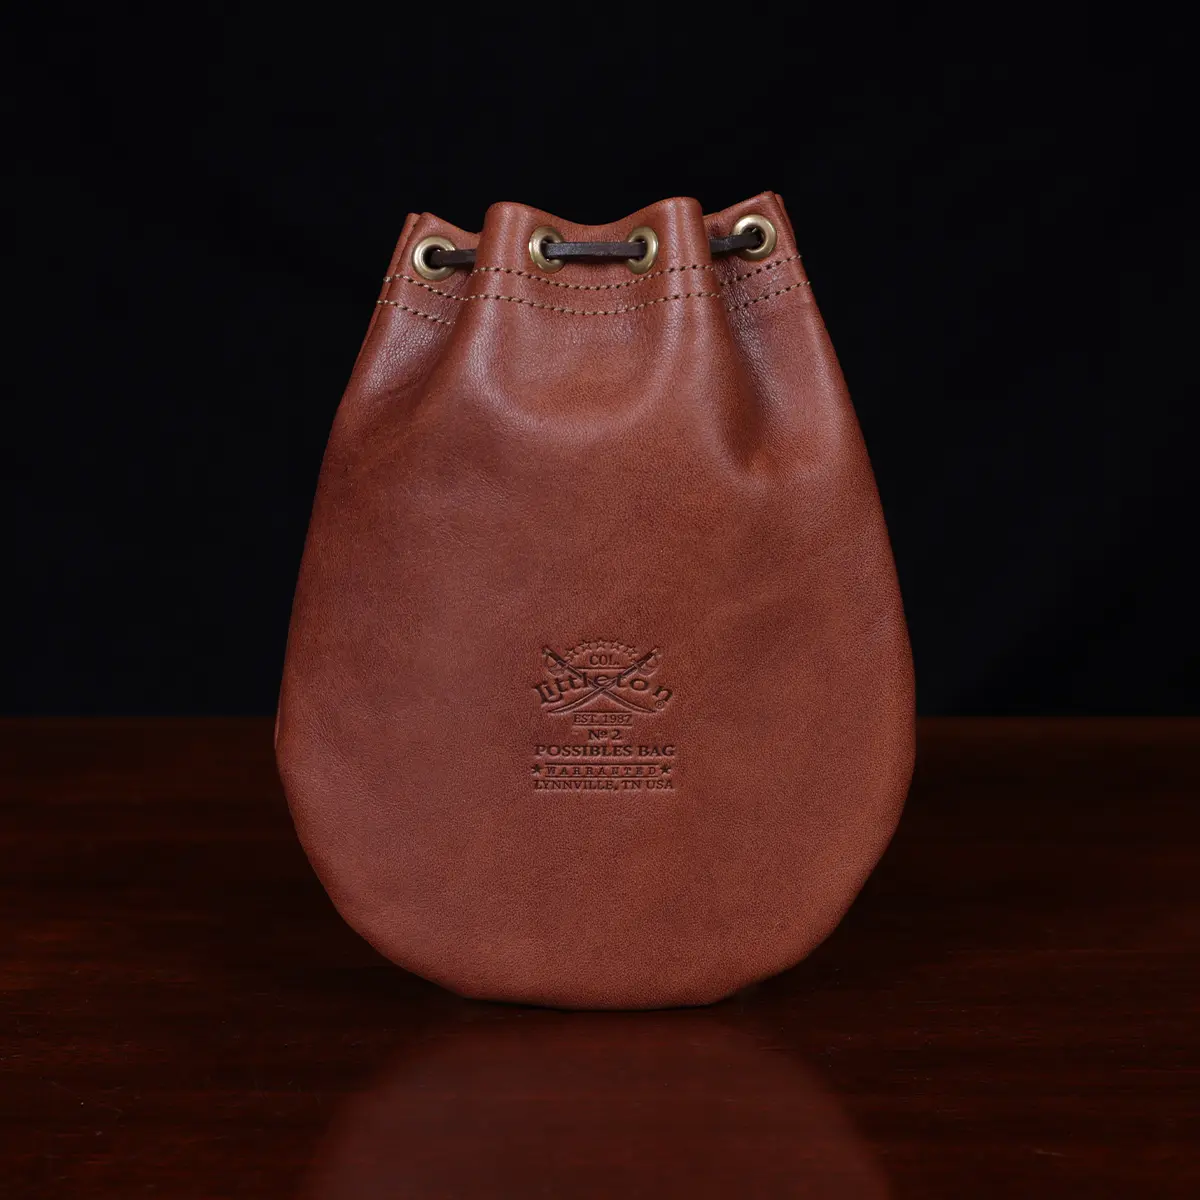 back side of the medium possibles bag in vintage brown steerhide